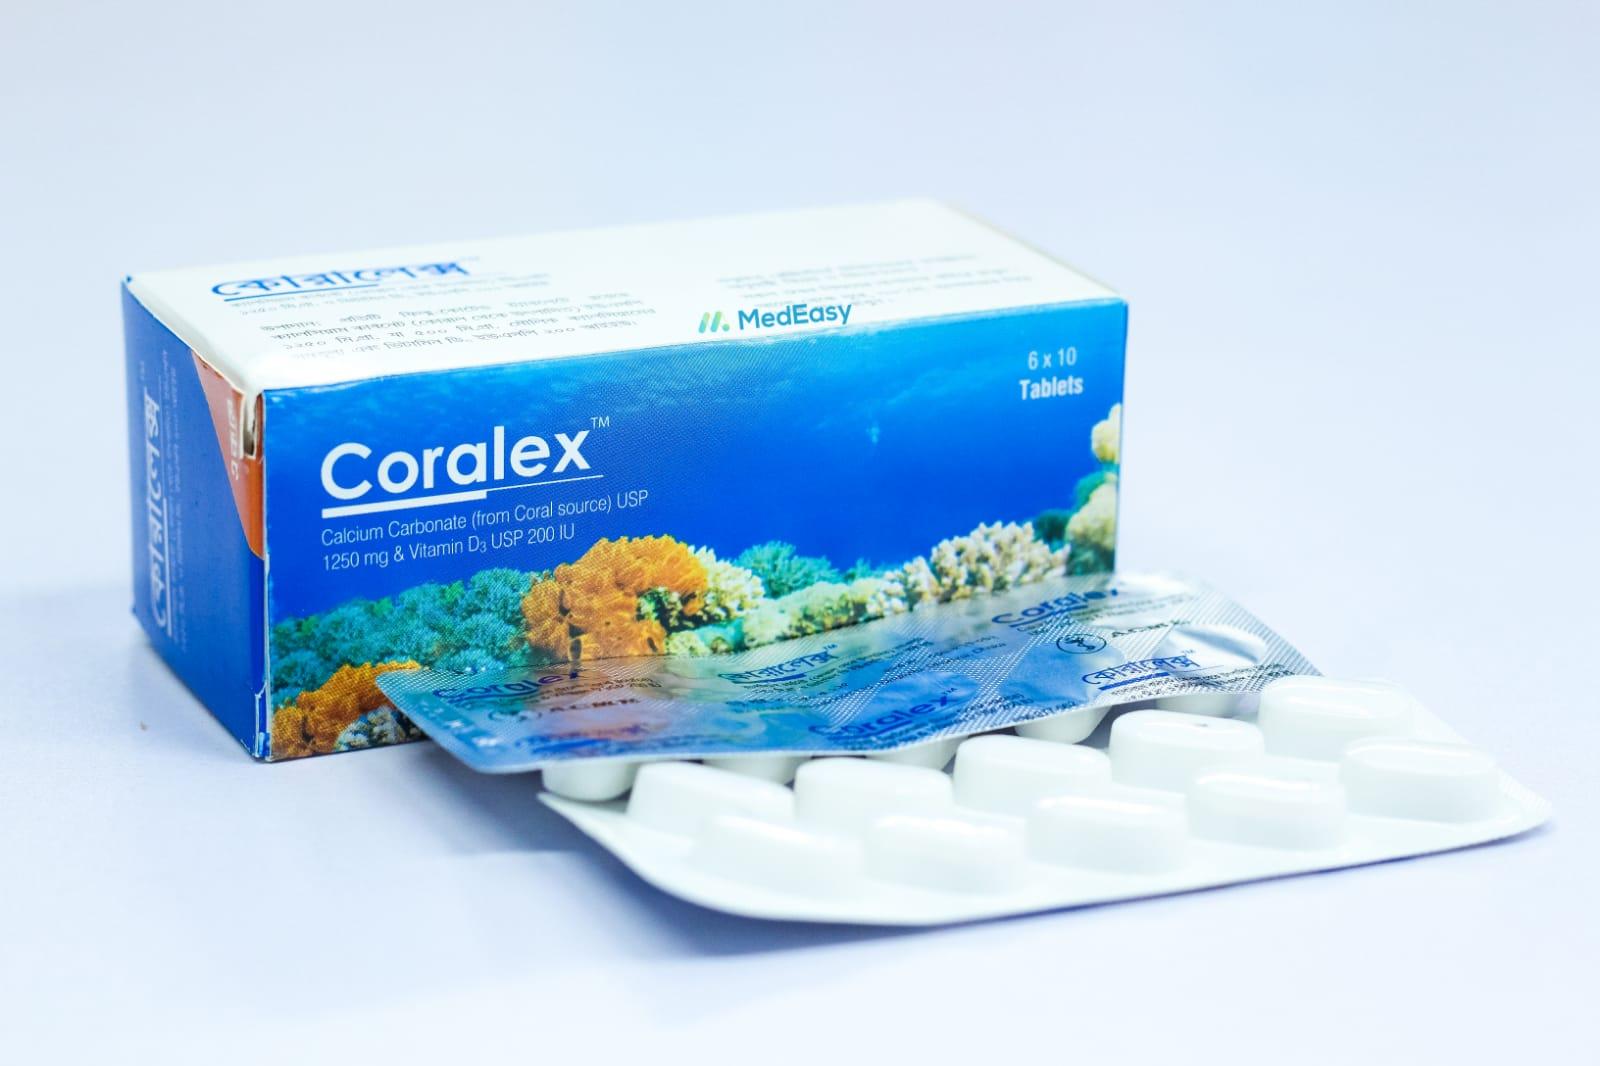 Coralex